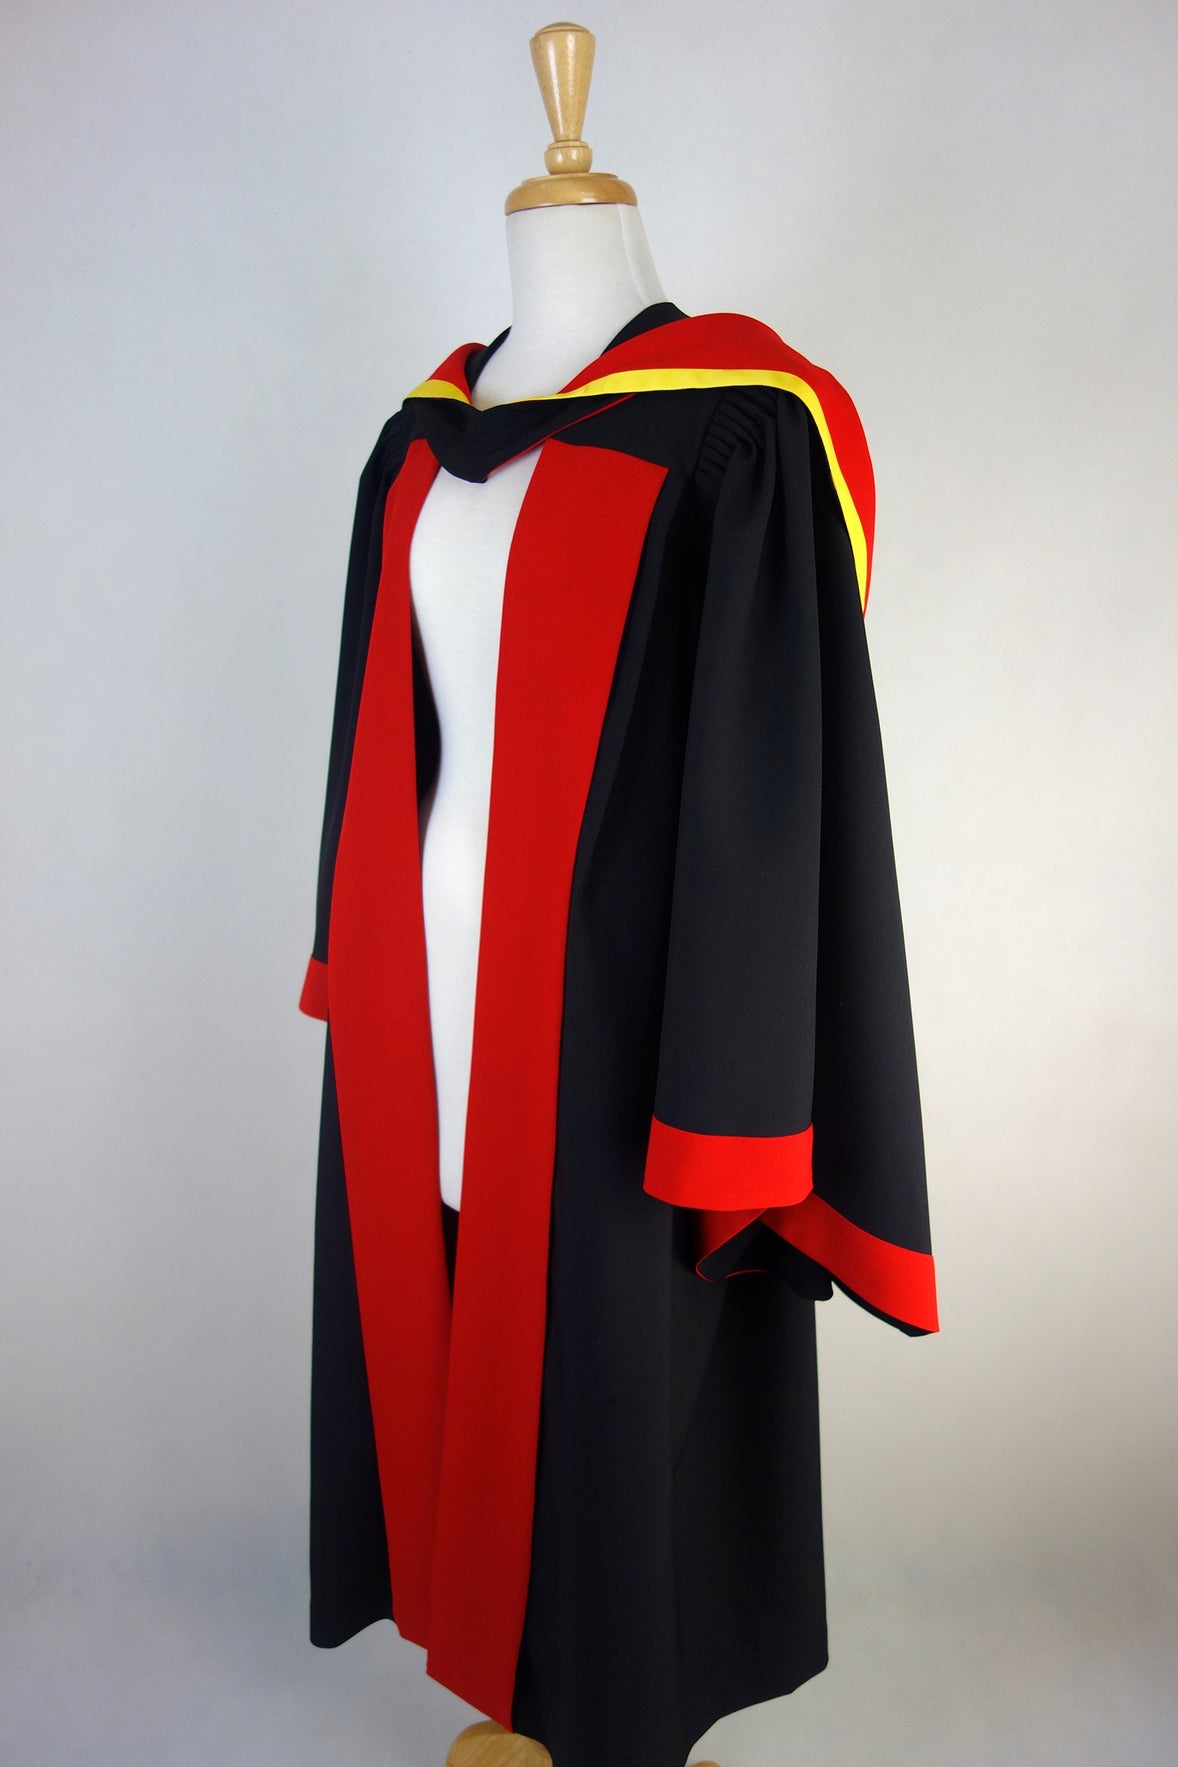 University of South Australia PhD Graduation Gown Set - Gown, Hood and Bonnet